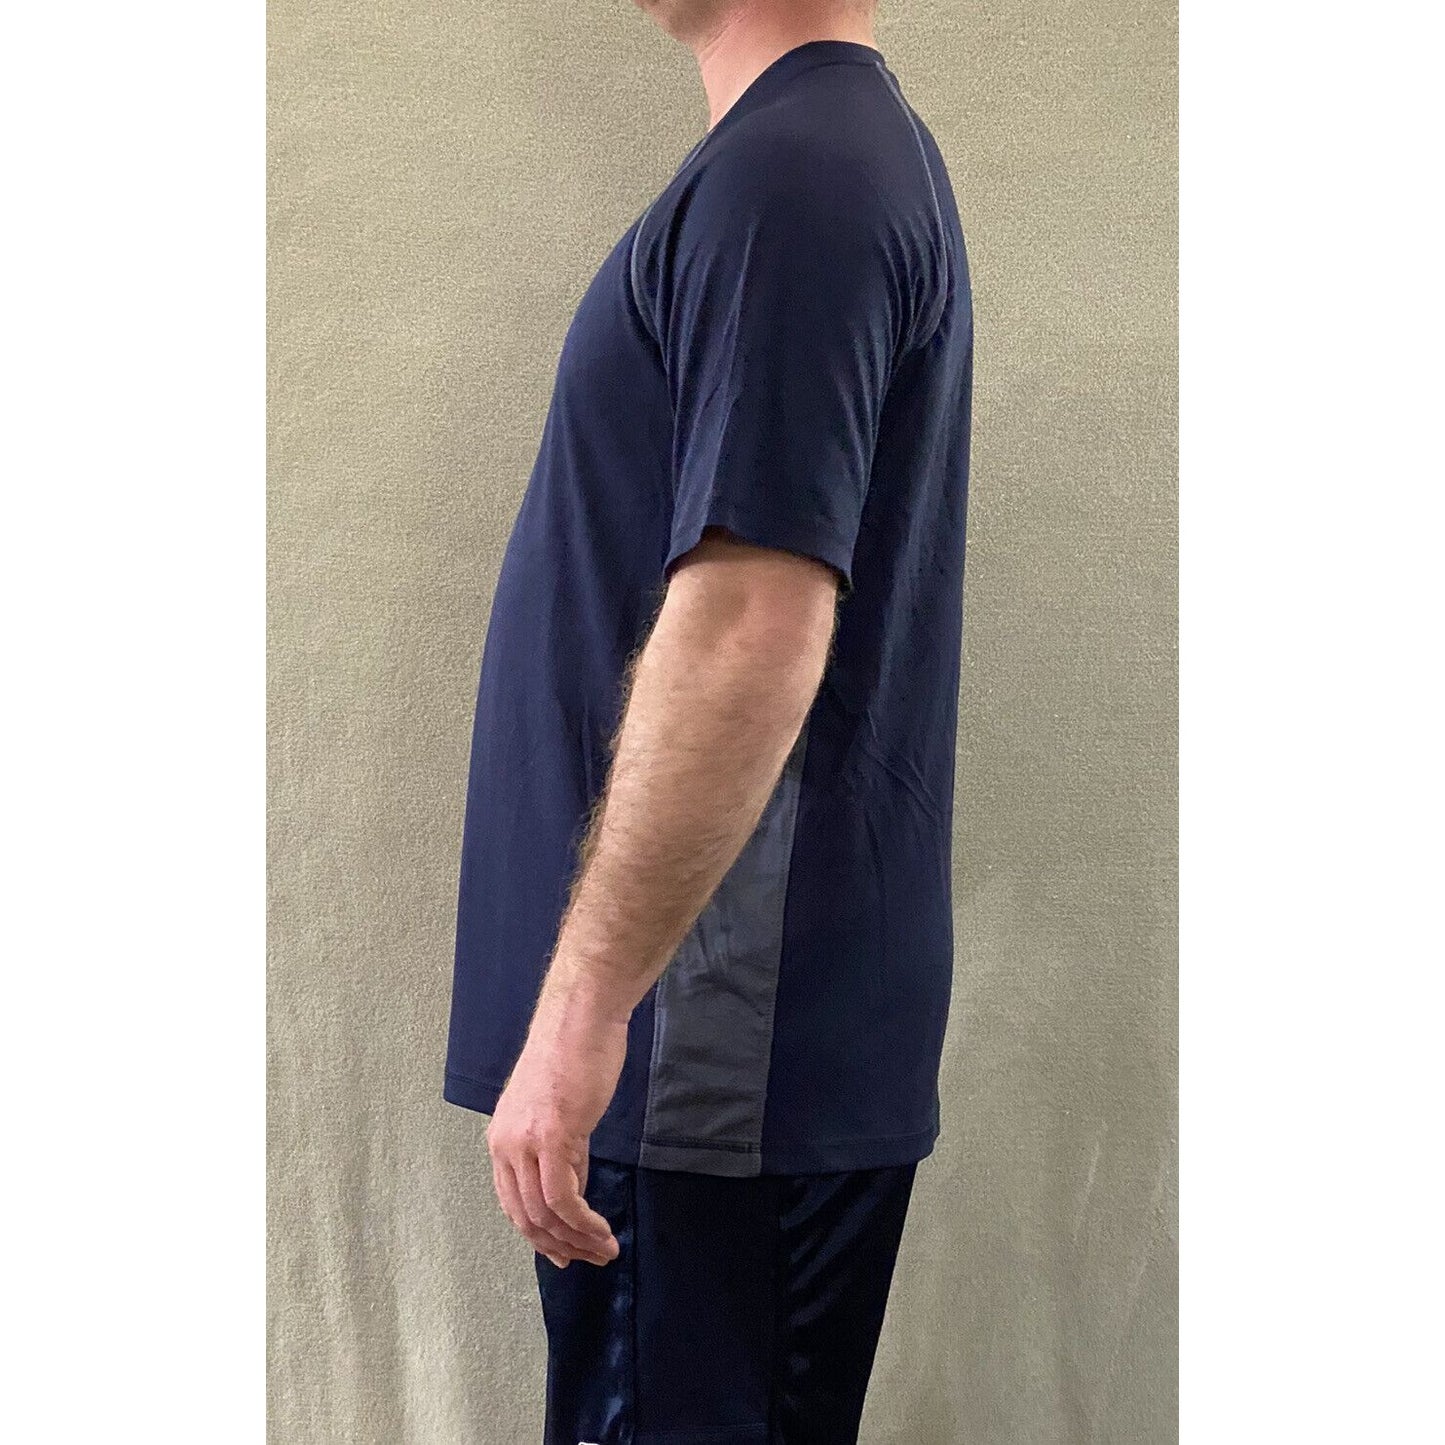 XT46 Extreme Training by Soffe Men’s Medium Navy Blue Athletic Polyester T-shirt